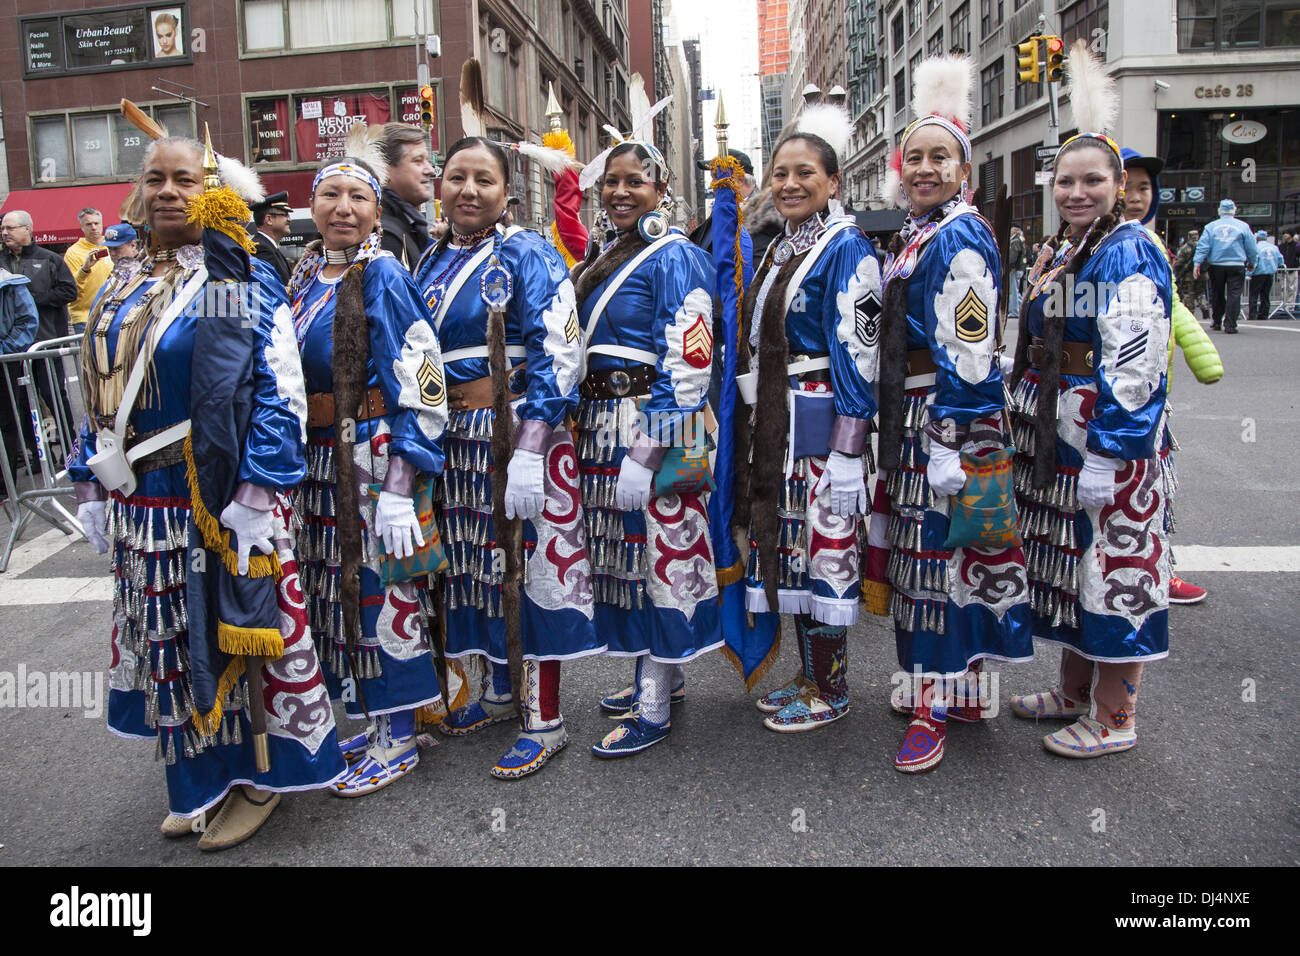 Veterans Day Parade along 5th Avenue in New York City. Organization of Native American Female Veterans. Stock Photo